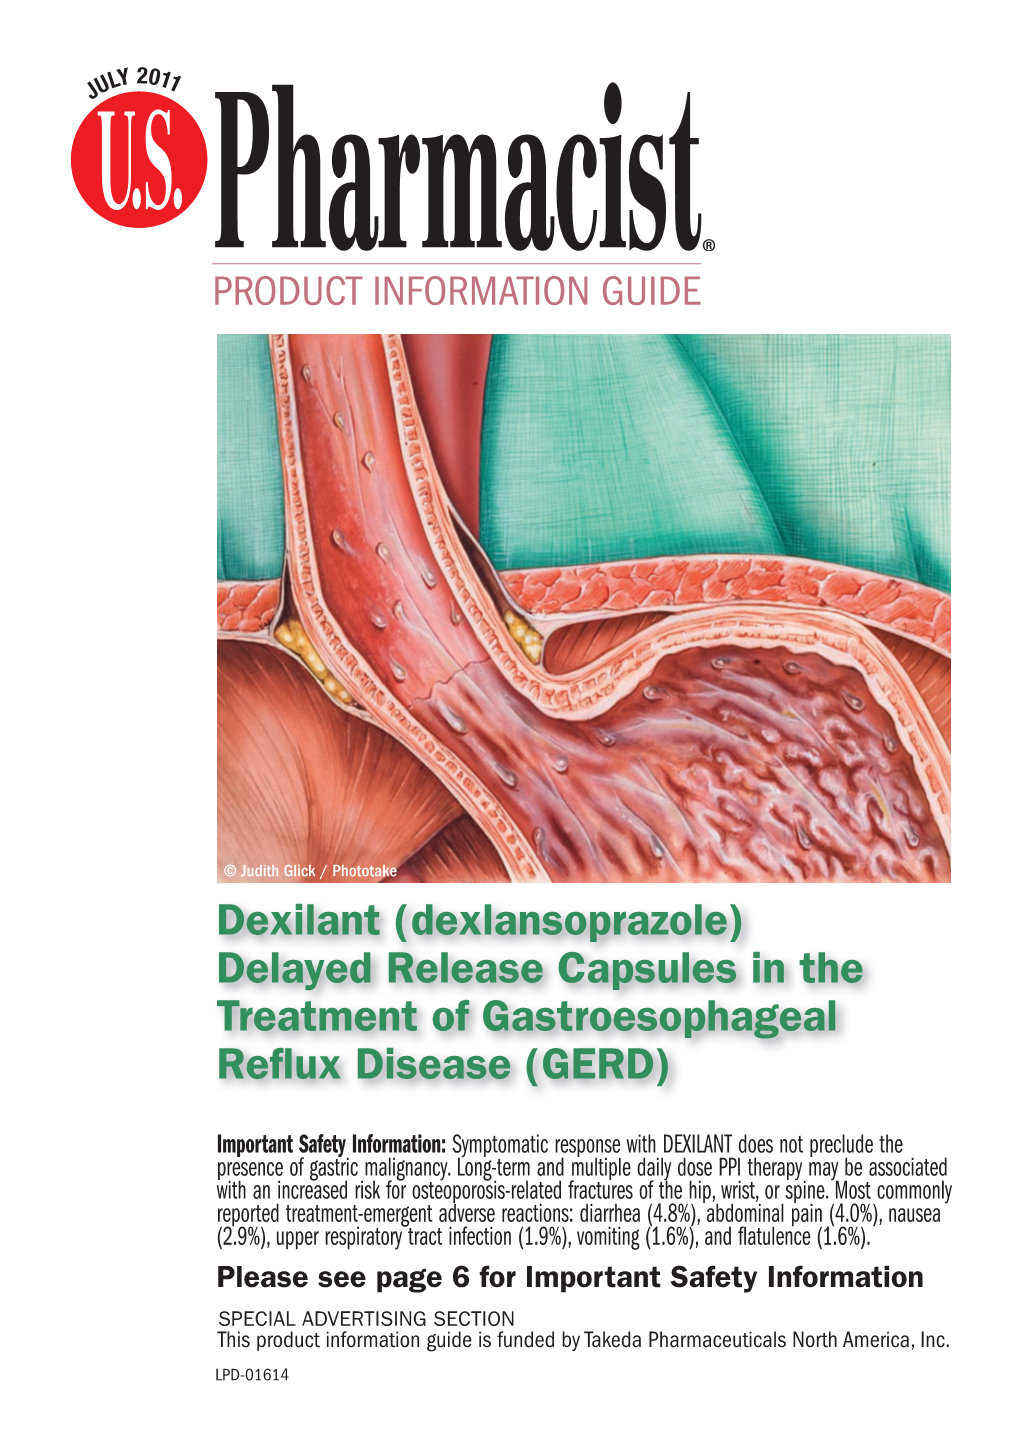 Dexilant (Dexlansoprazole) Delayed Release Capsules in the Treatment of Gastroesophageal Reflux Disease (GERD)